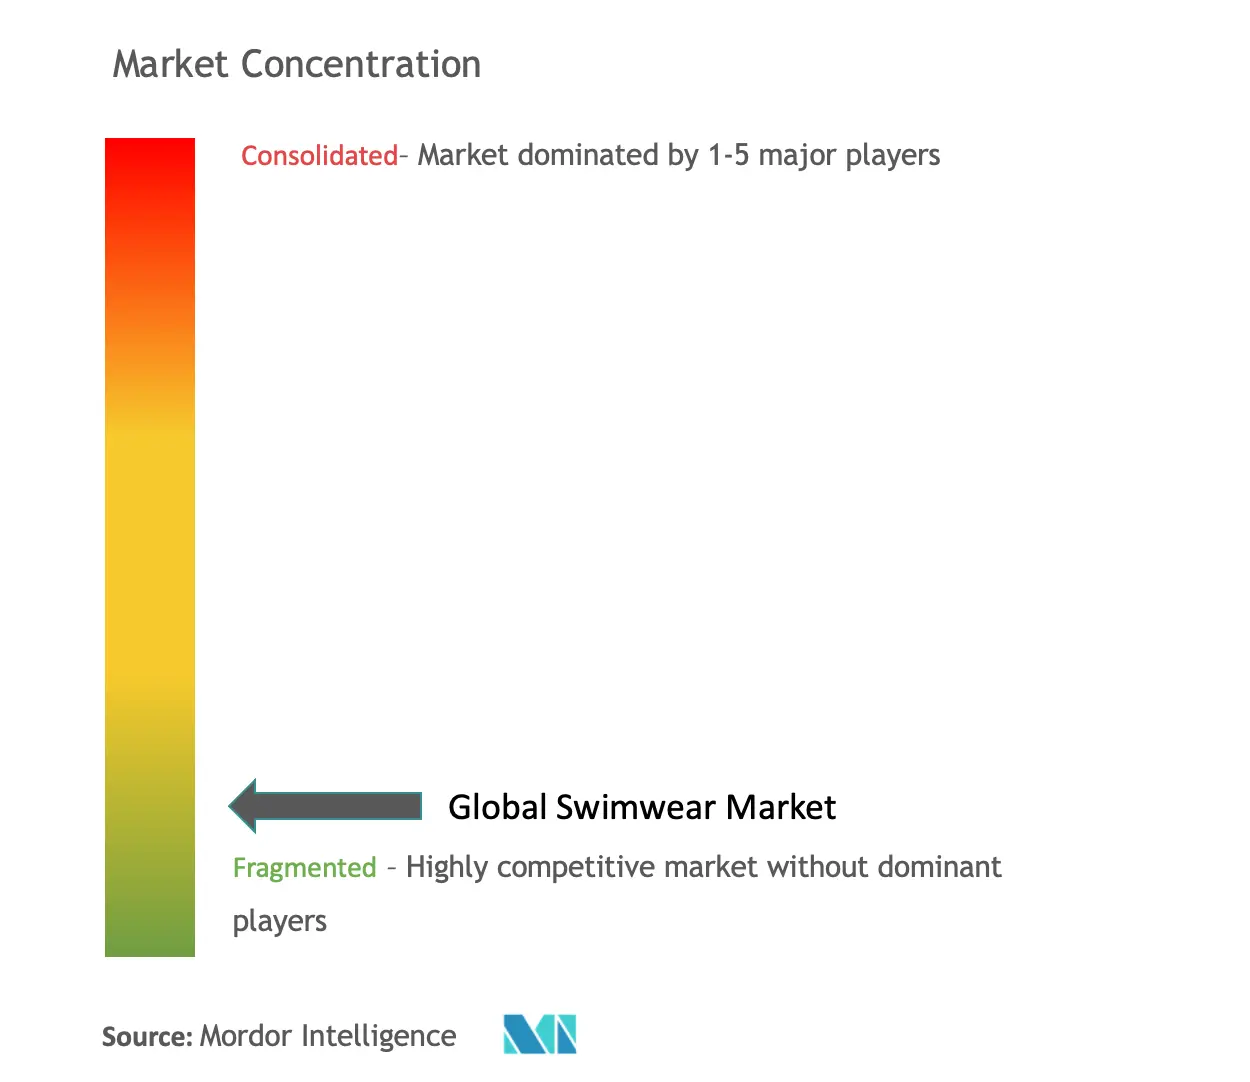 Swimwear Market Concentration